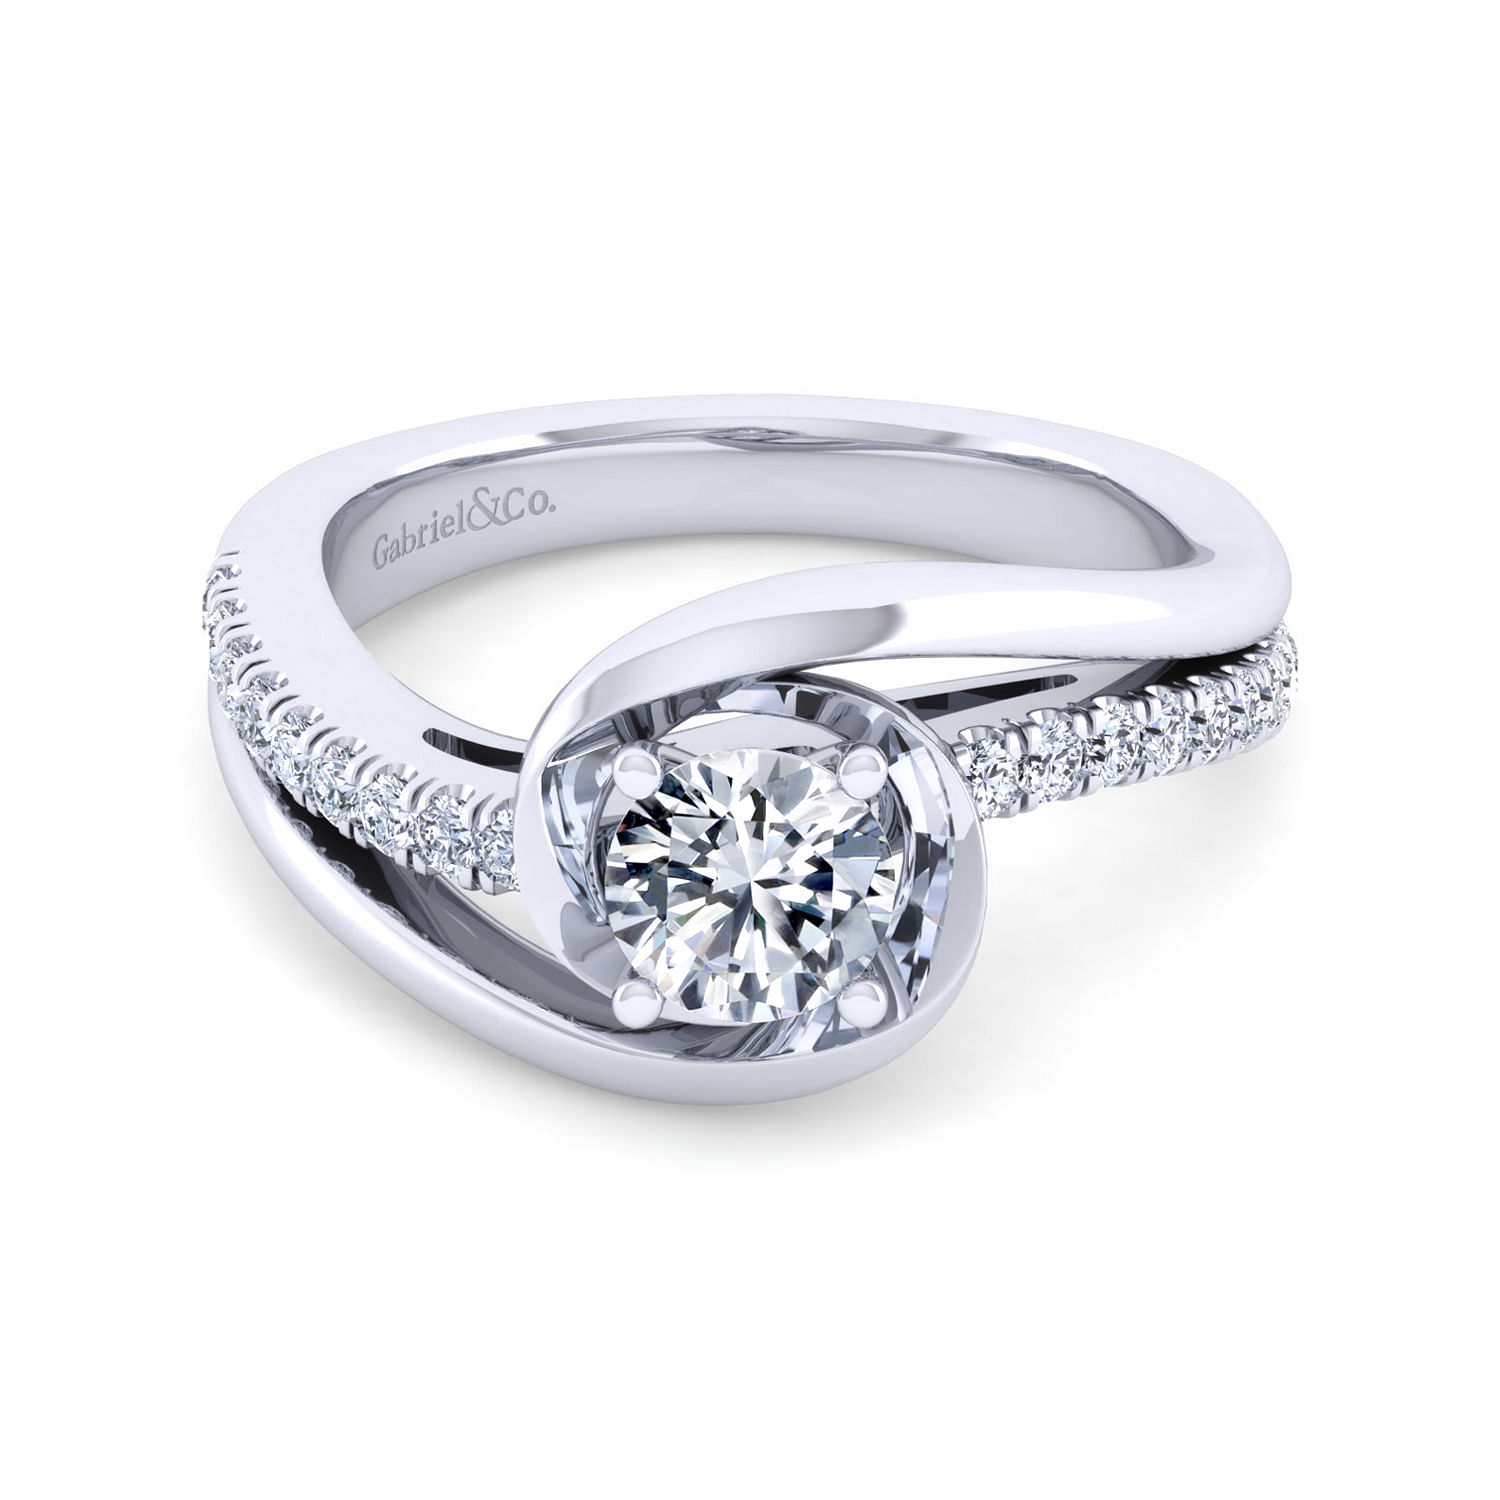 Lucca - 14K White Gold Round Diamond Engagement Ring